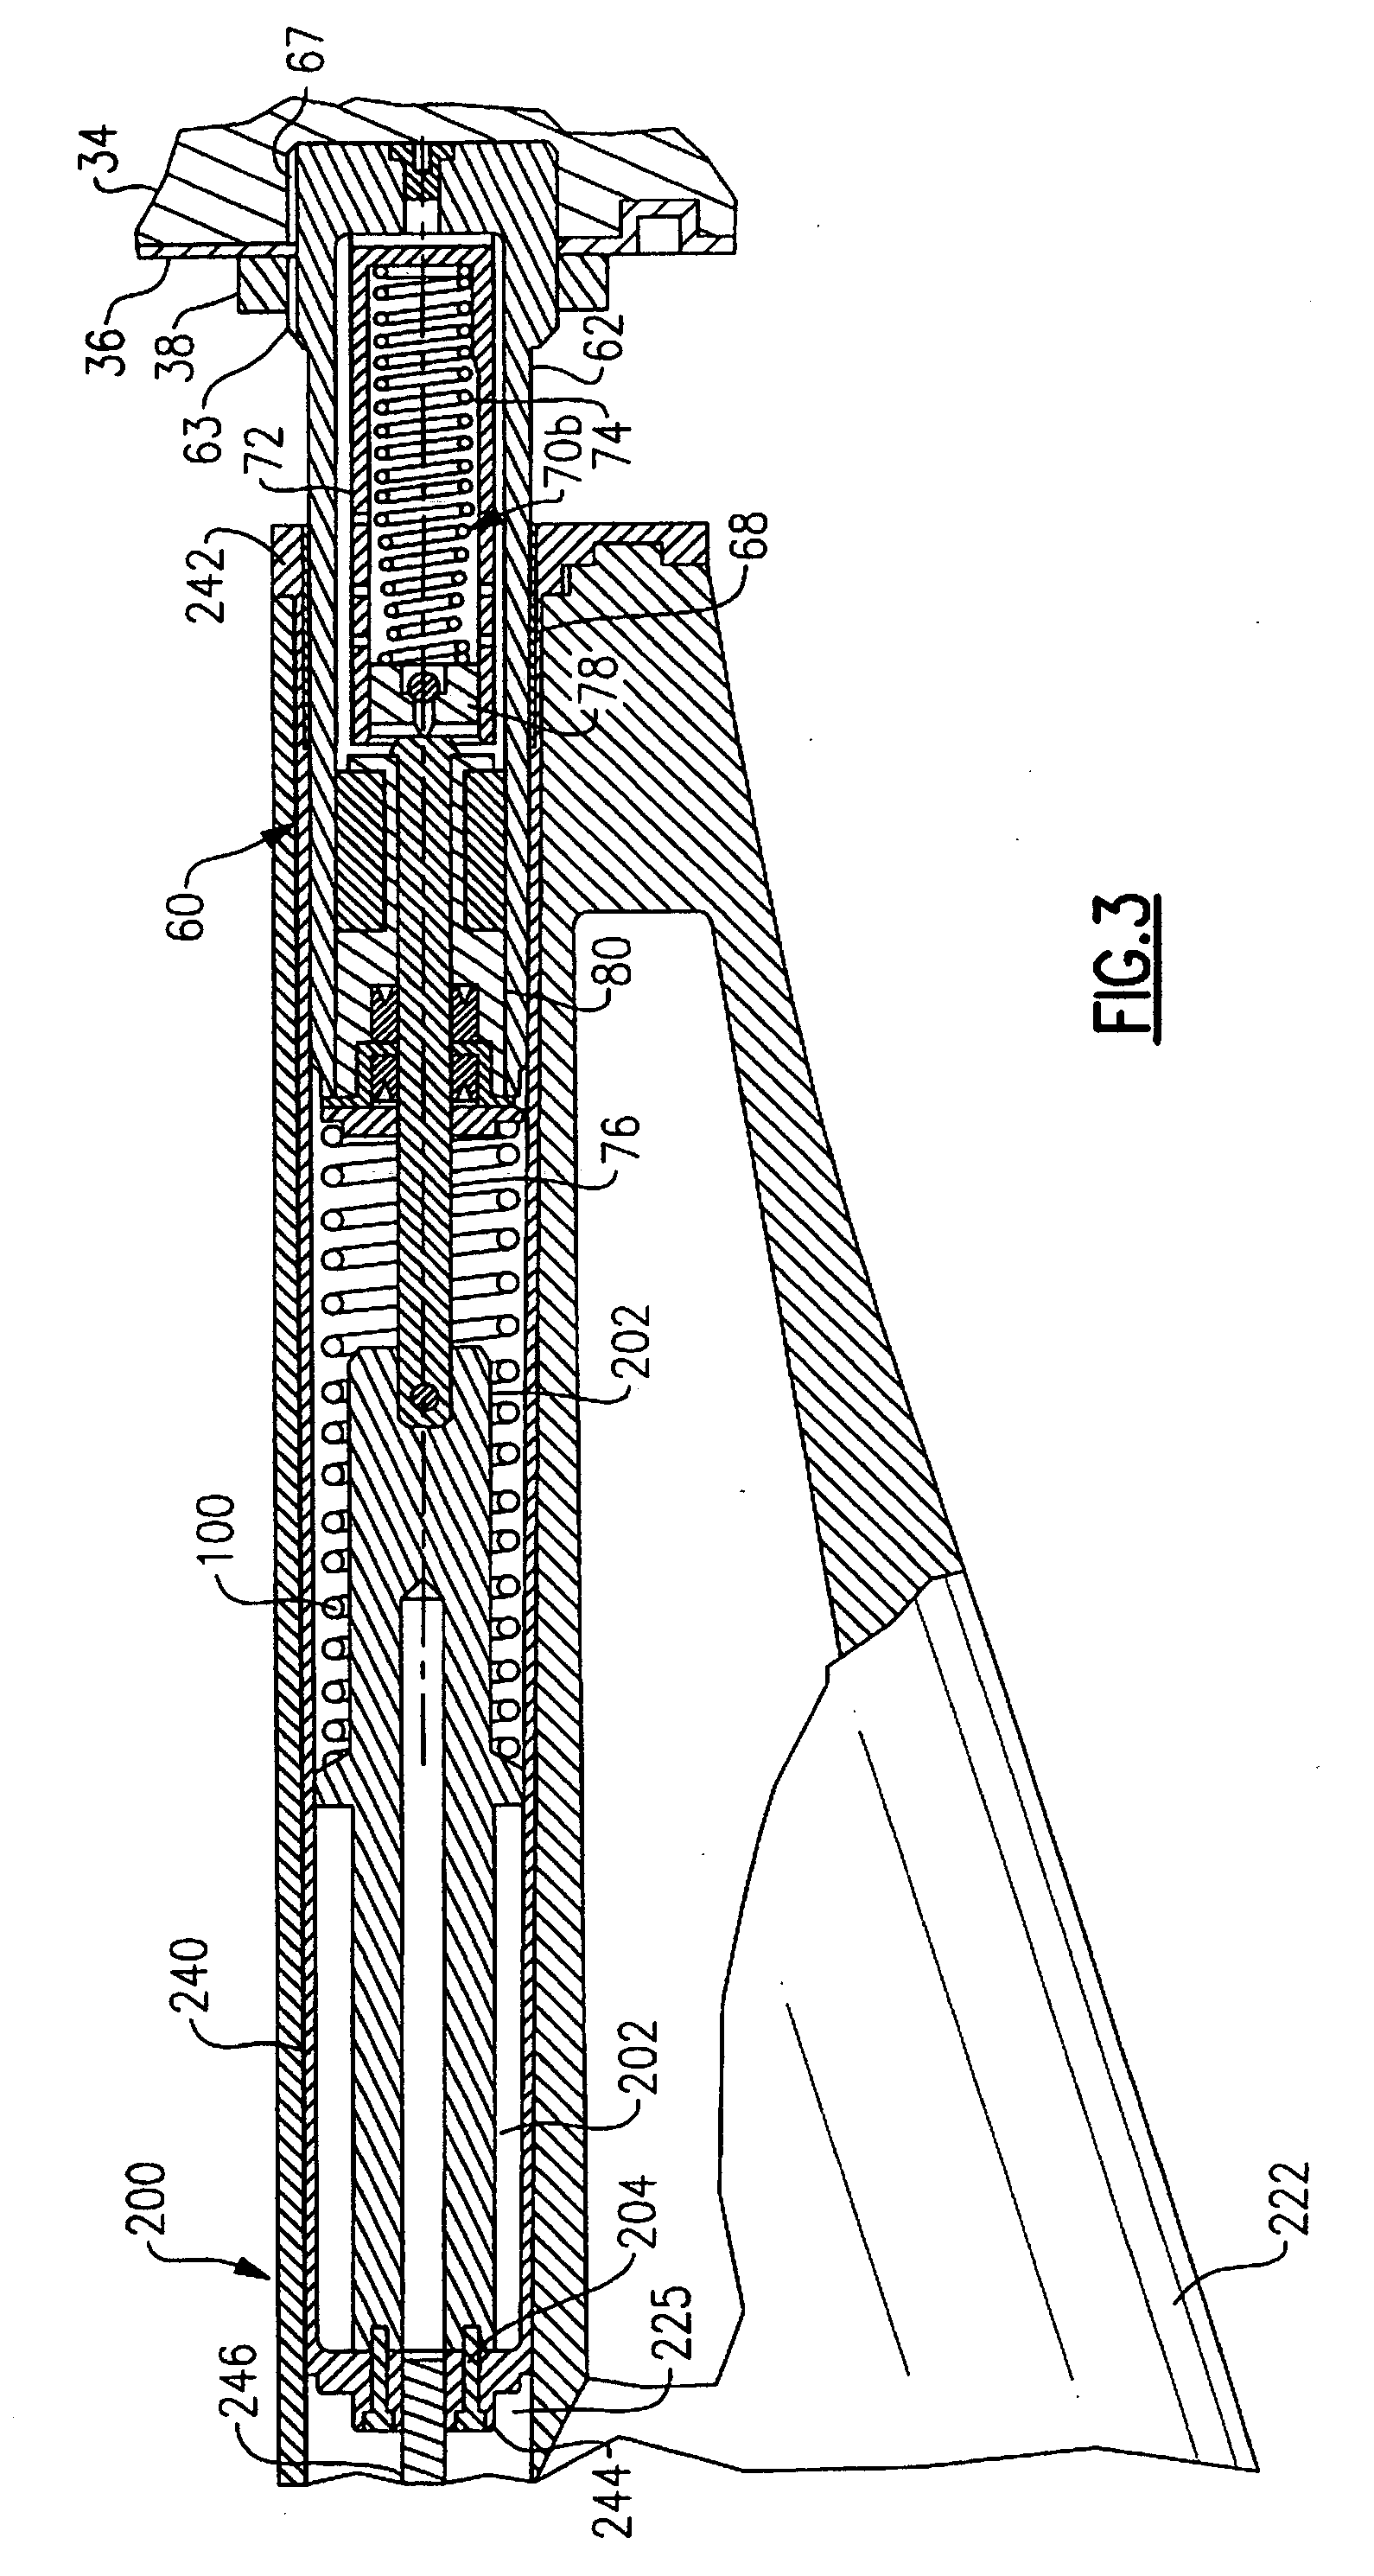 Hydraulic recoil buffer assembly